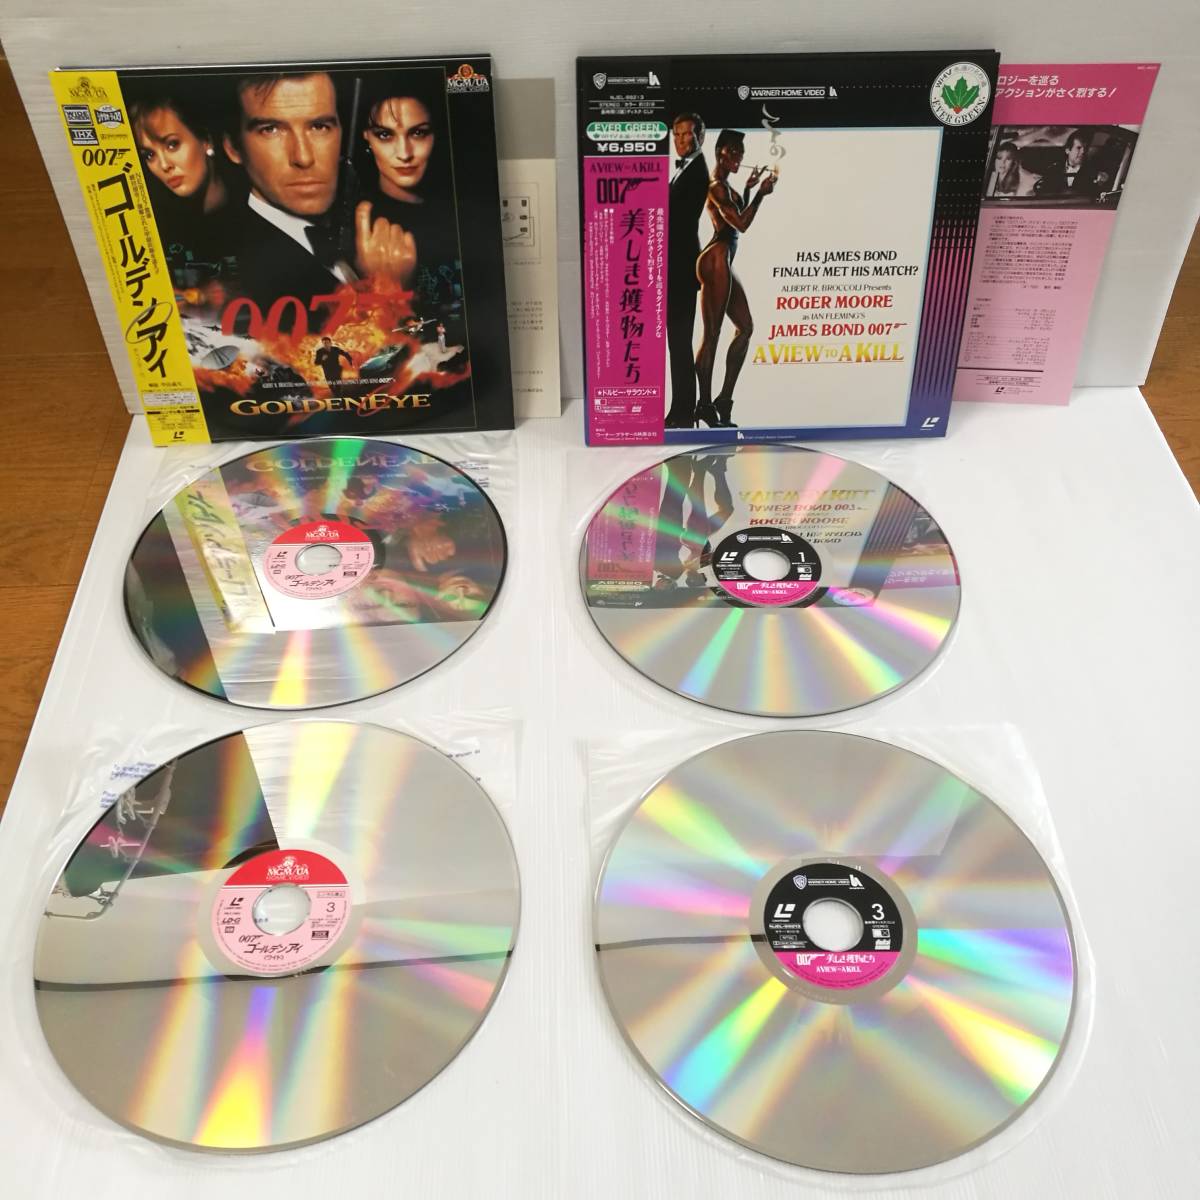 [L0103]LD 007 set sale / laser disk / I . love did Spy / Golden I /. was done license / beautiful ... thing ../ together / summarize / large amount 